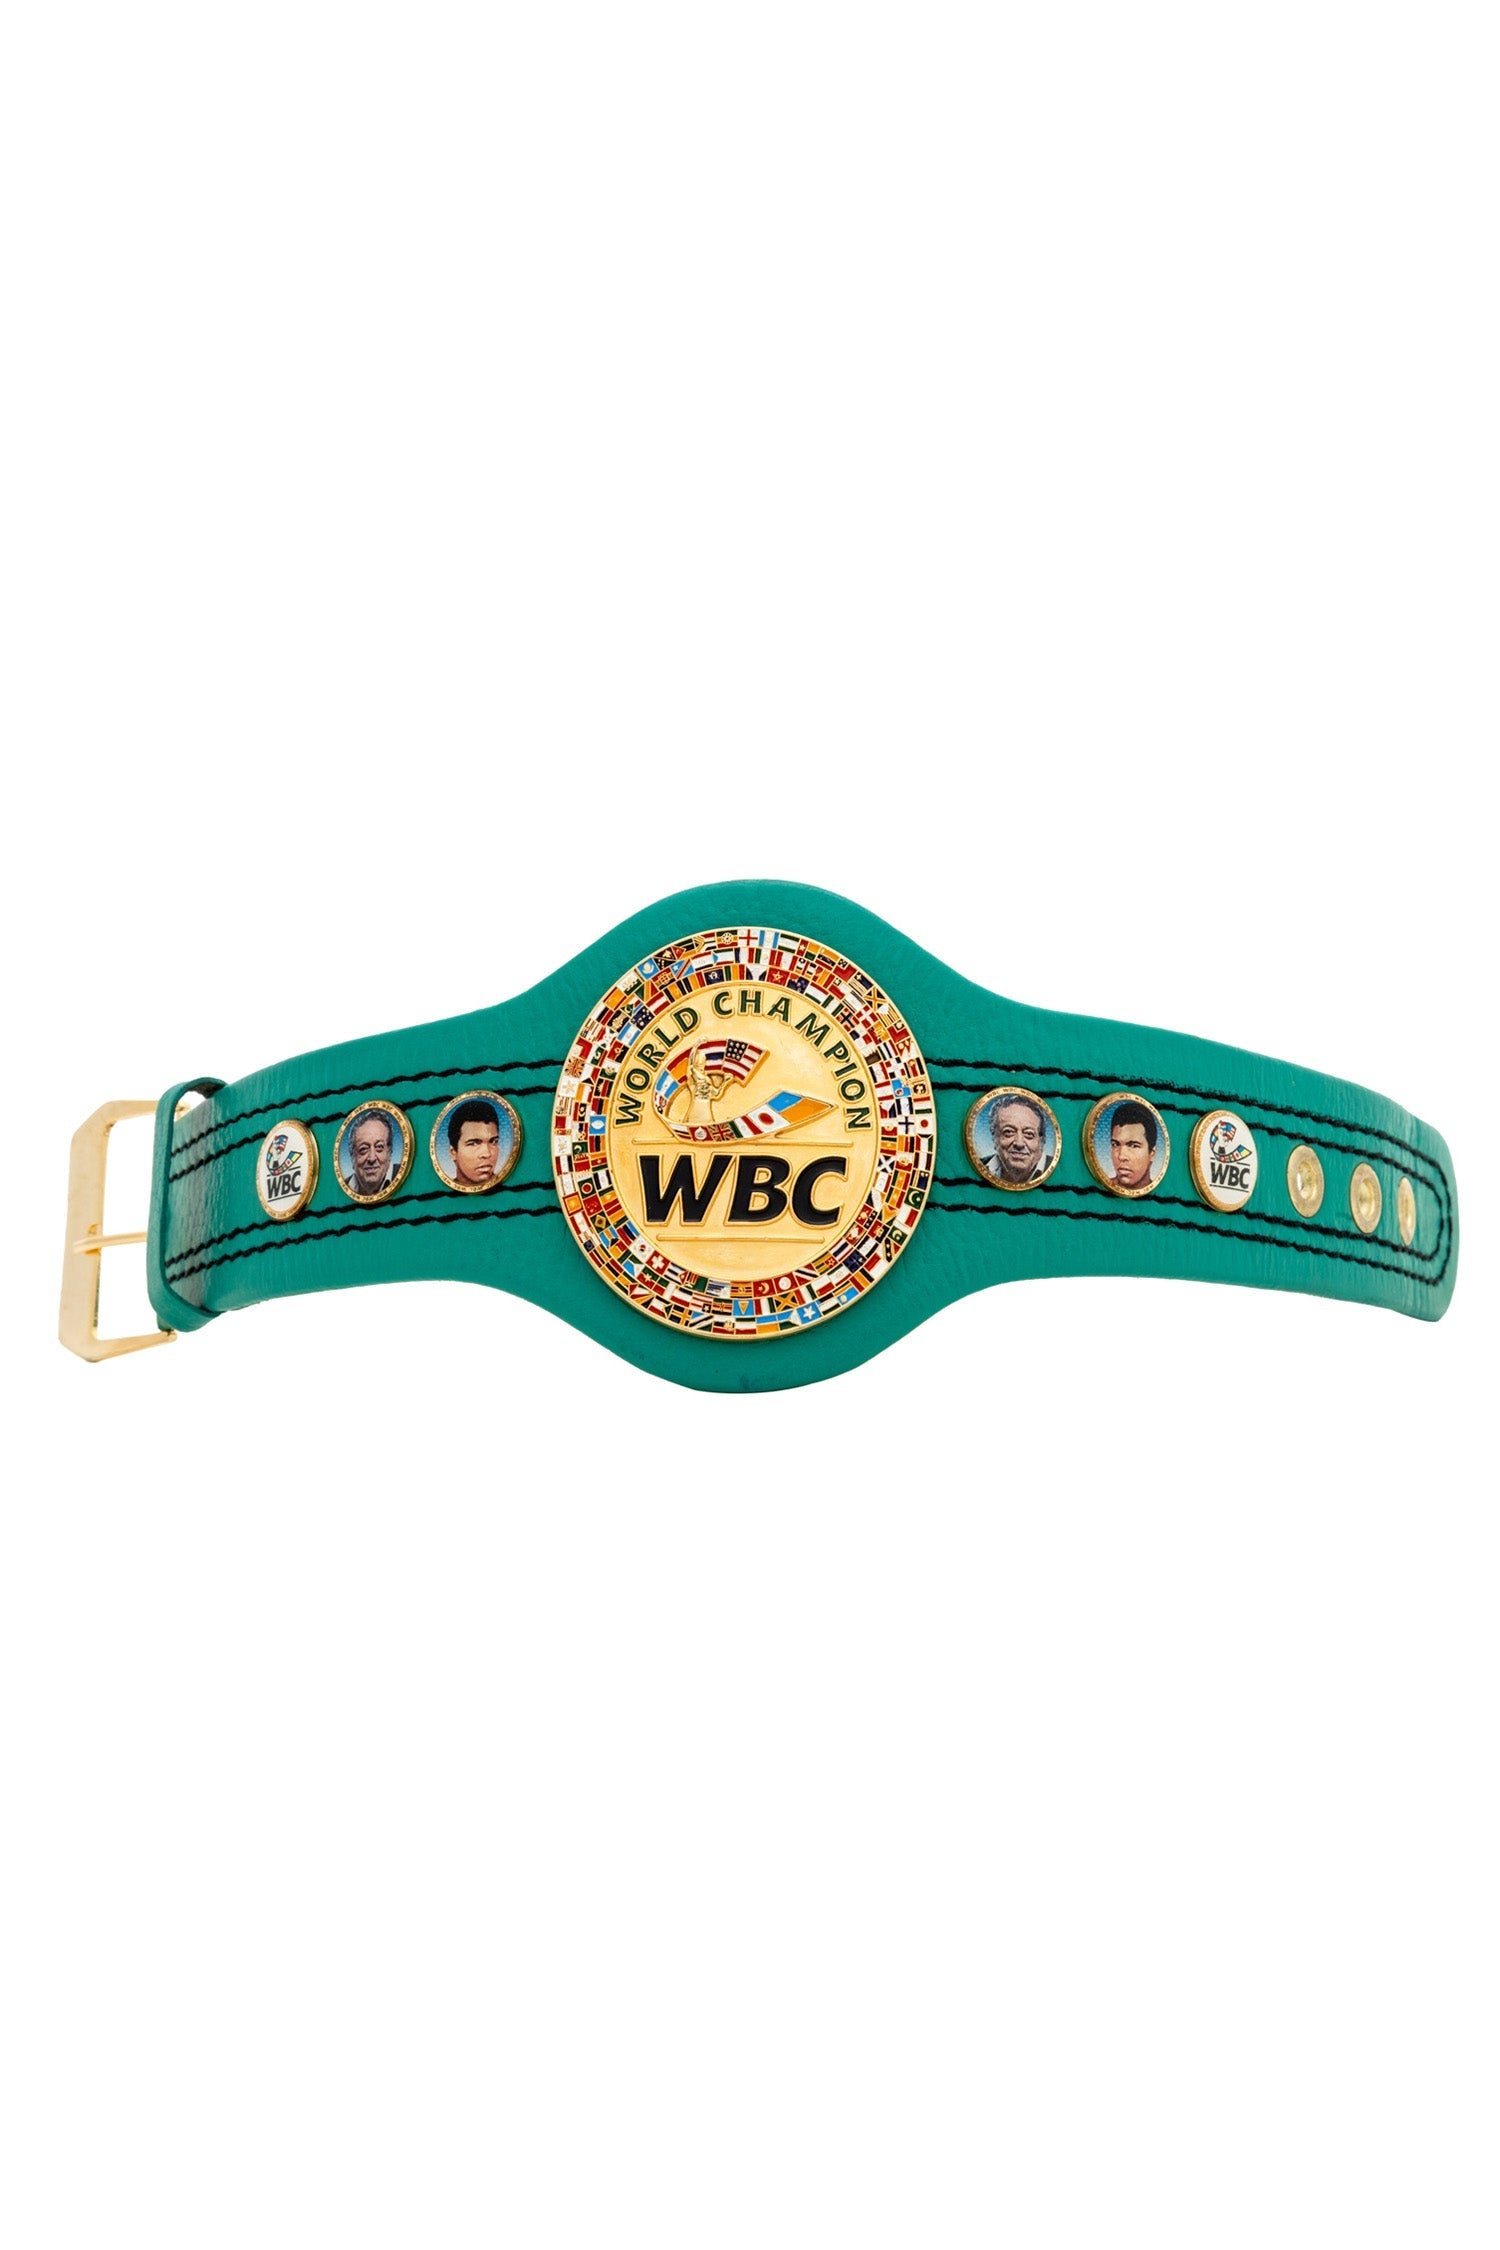 WBC - Championship Replica Belt